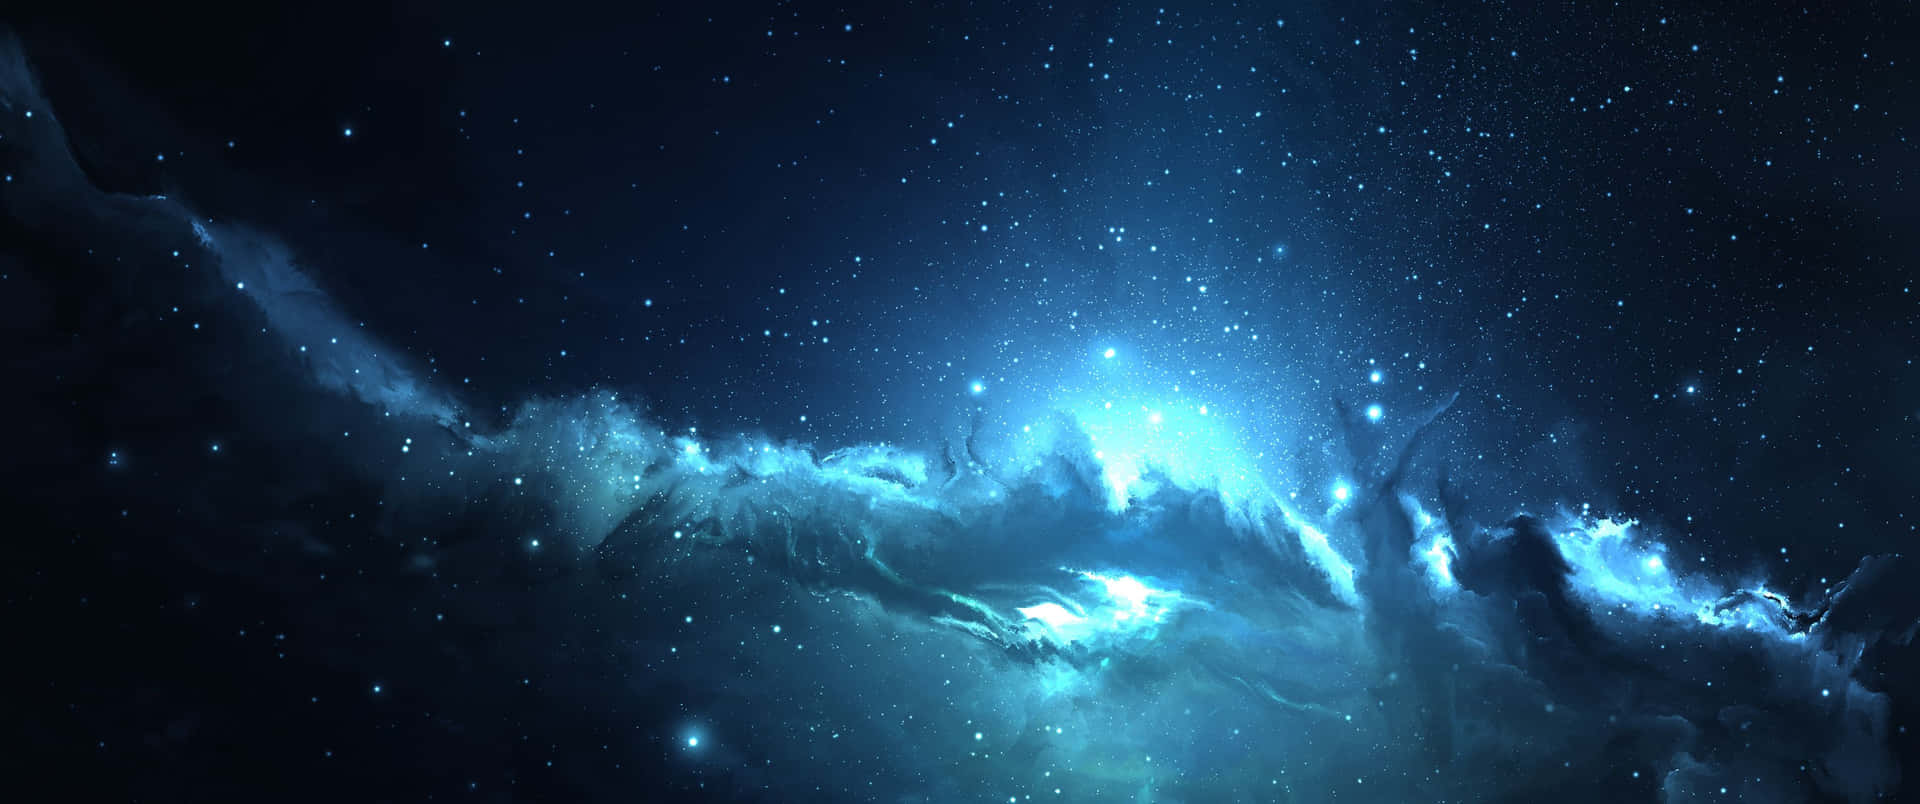 Starry Nebula Space Scene Wallpaper